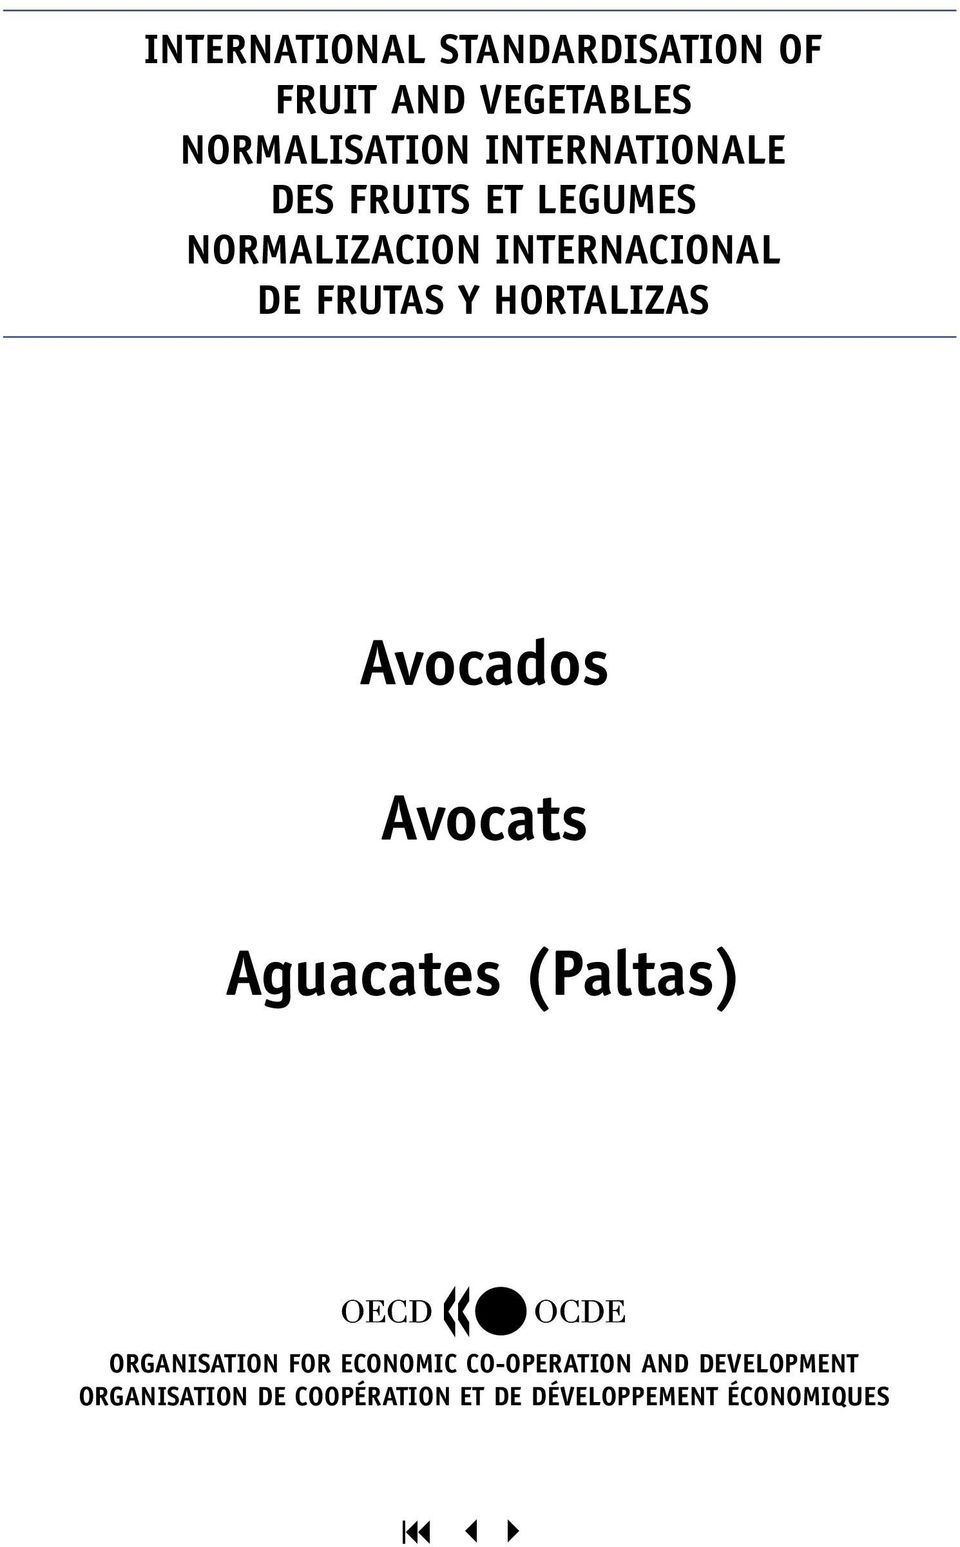 HORTALIZAS Avocados Avocats Aguacates (Paltas) ORGANISATION FOR ECONOMIC